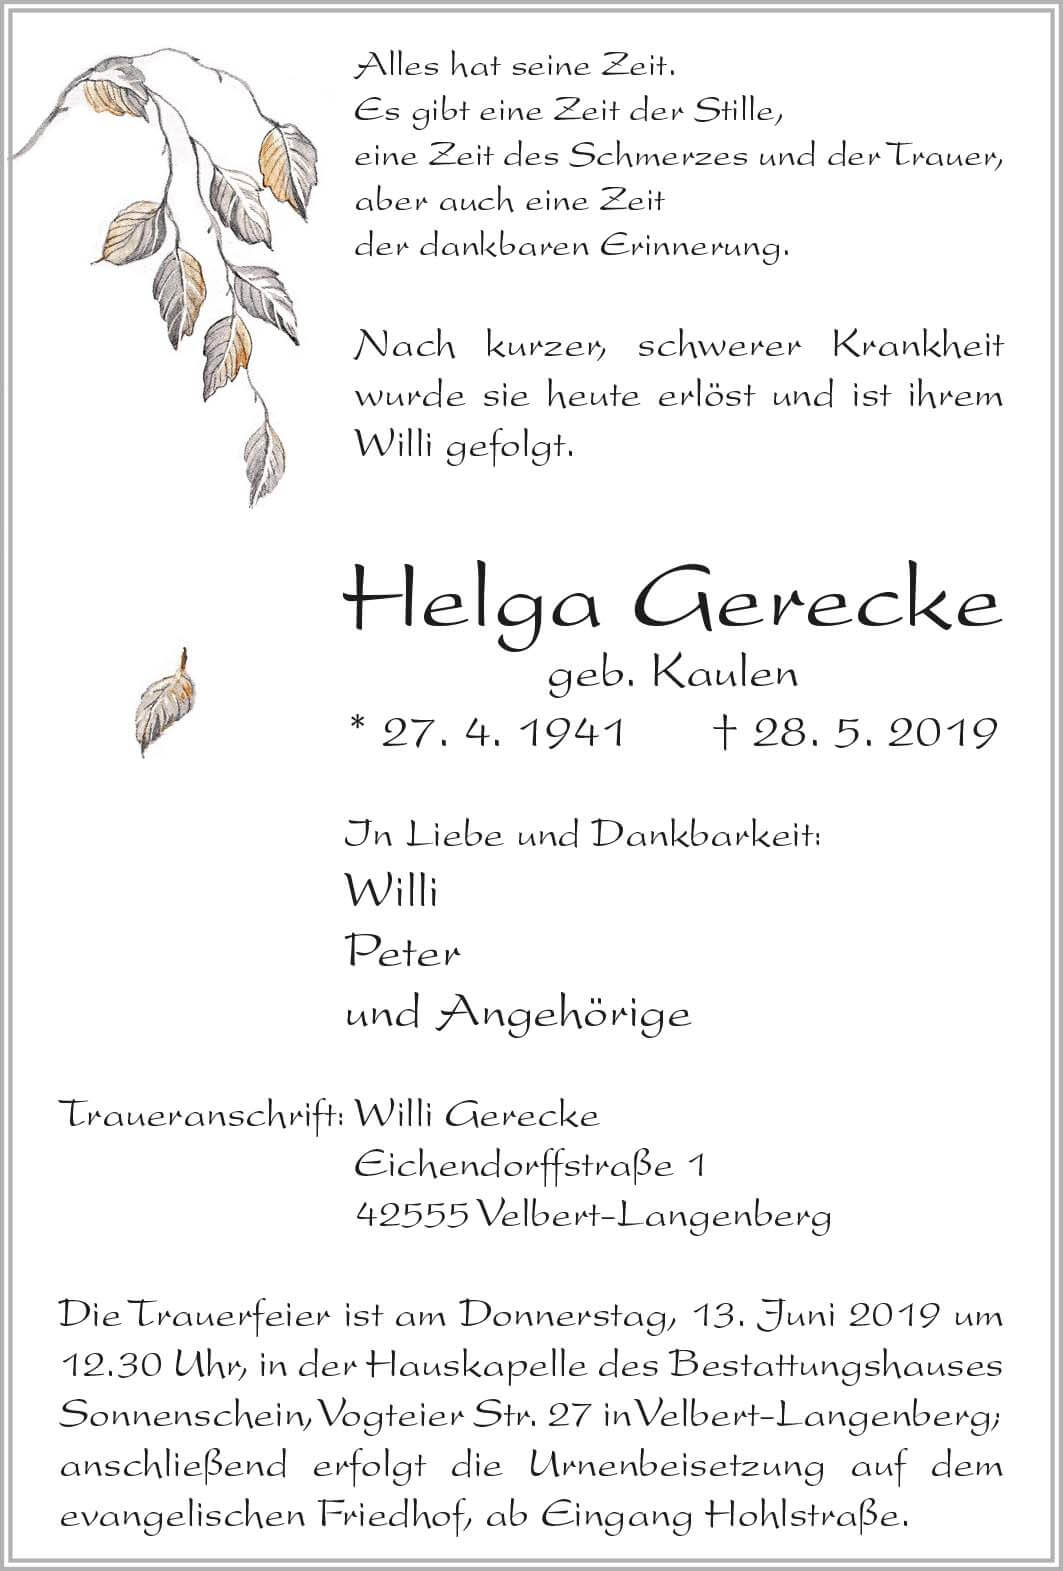 Helga Gerecke † 28. 5. 2019